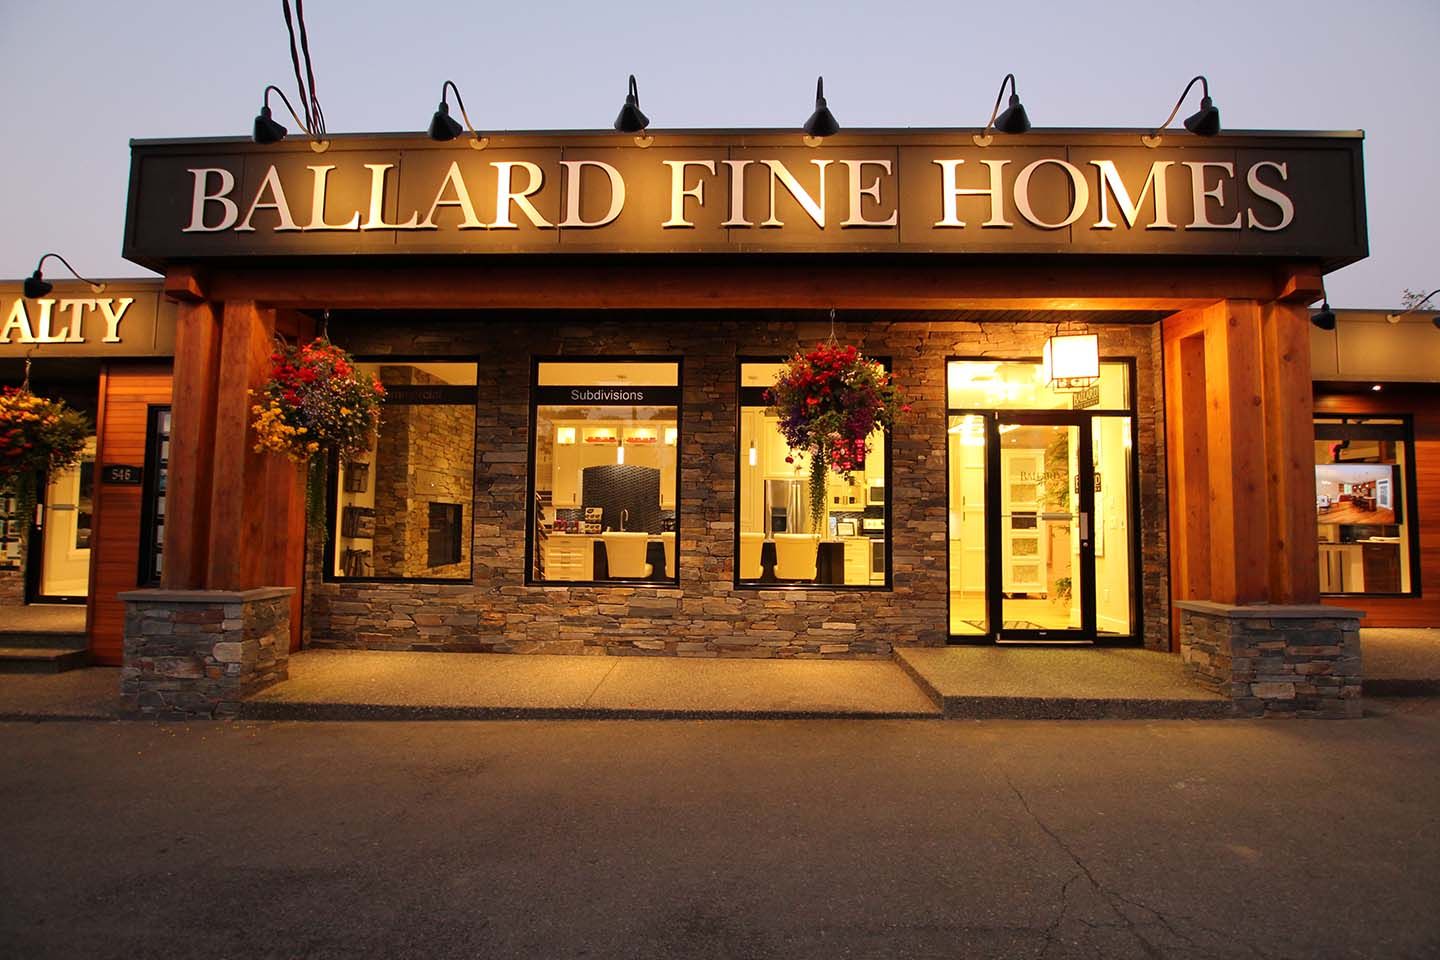 Exterior of Ballard Fine Homes showroom